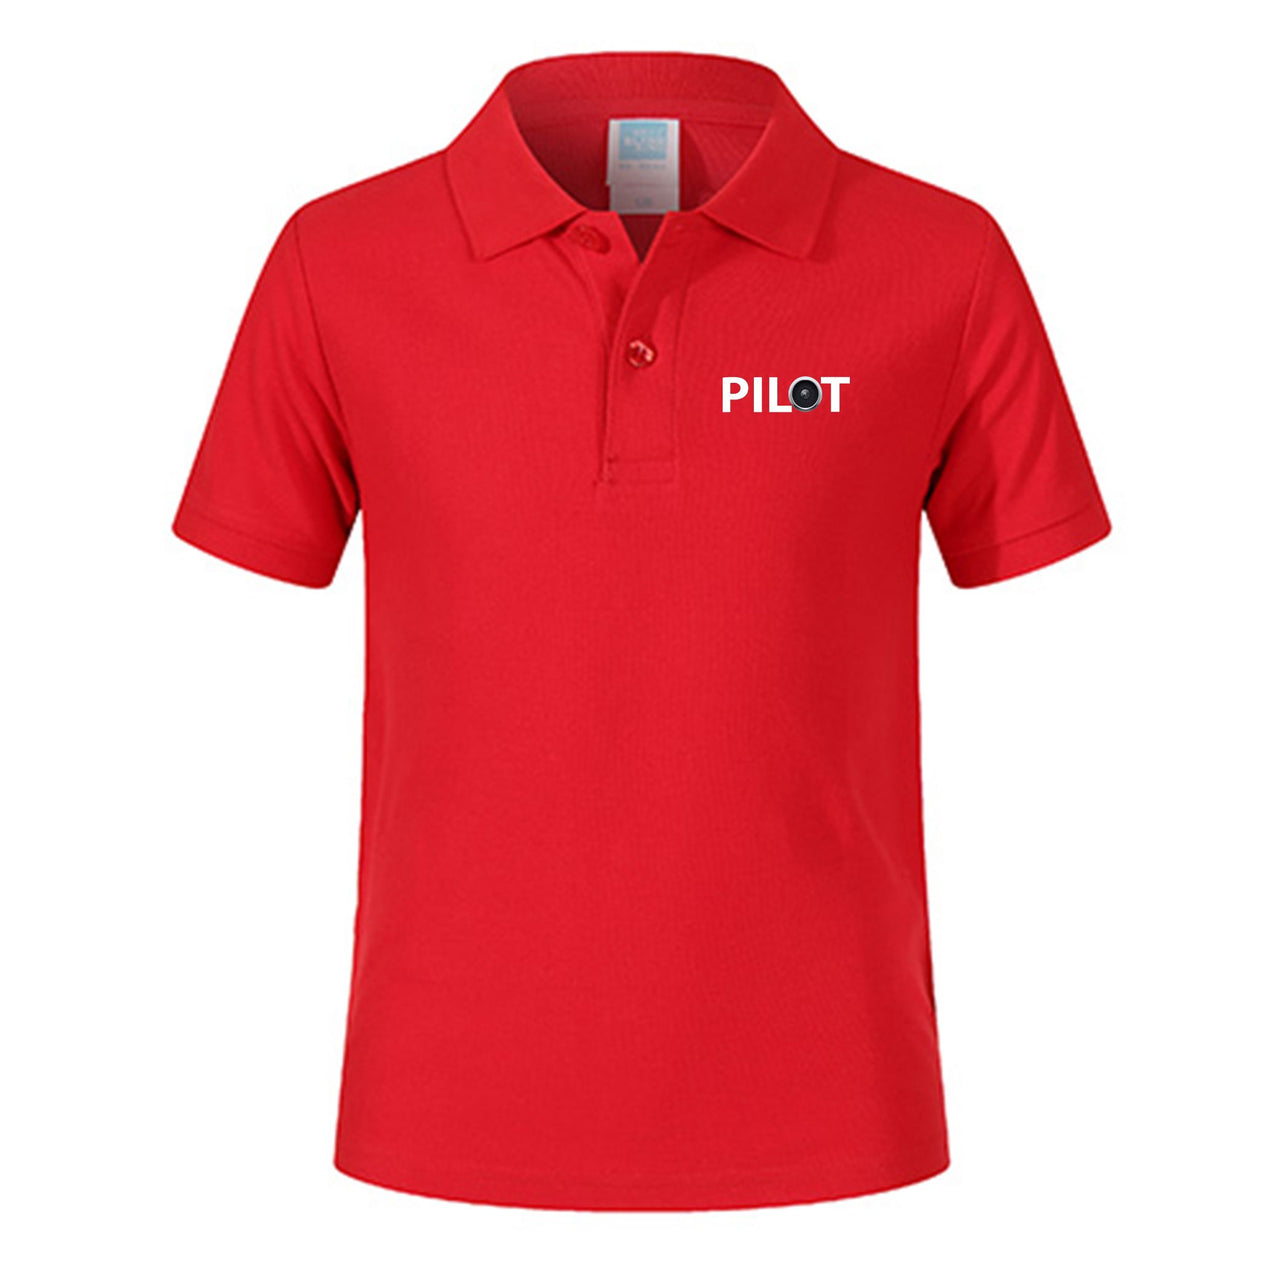 Pilot & Jet Engine Designed Children Polo T-Shirts